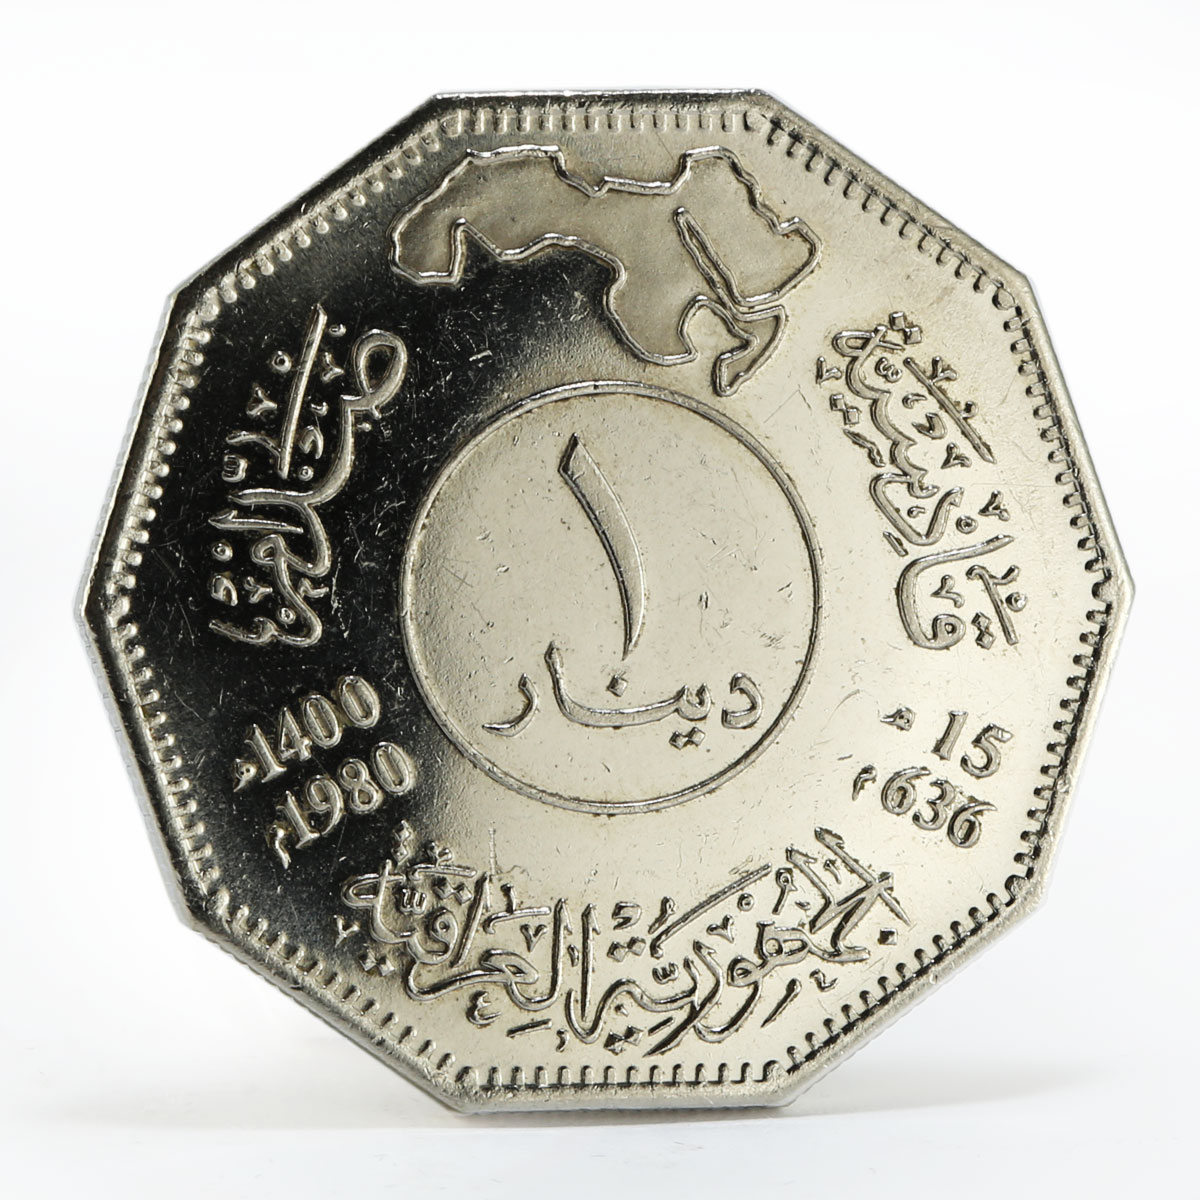 Iraq 1 dinar Battle of al-Qadisiyyah proof nickel coin 1980